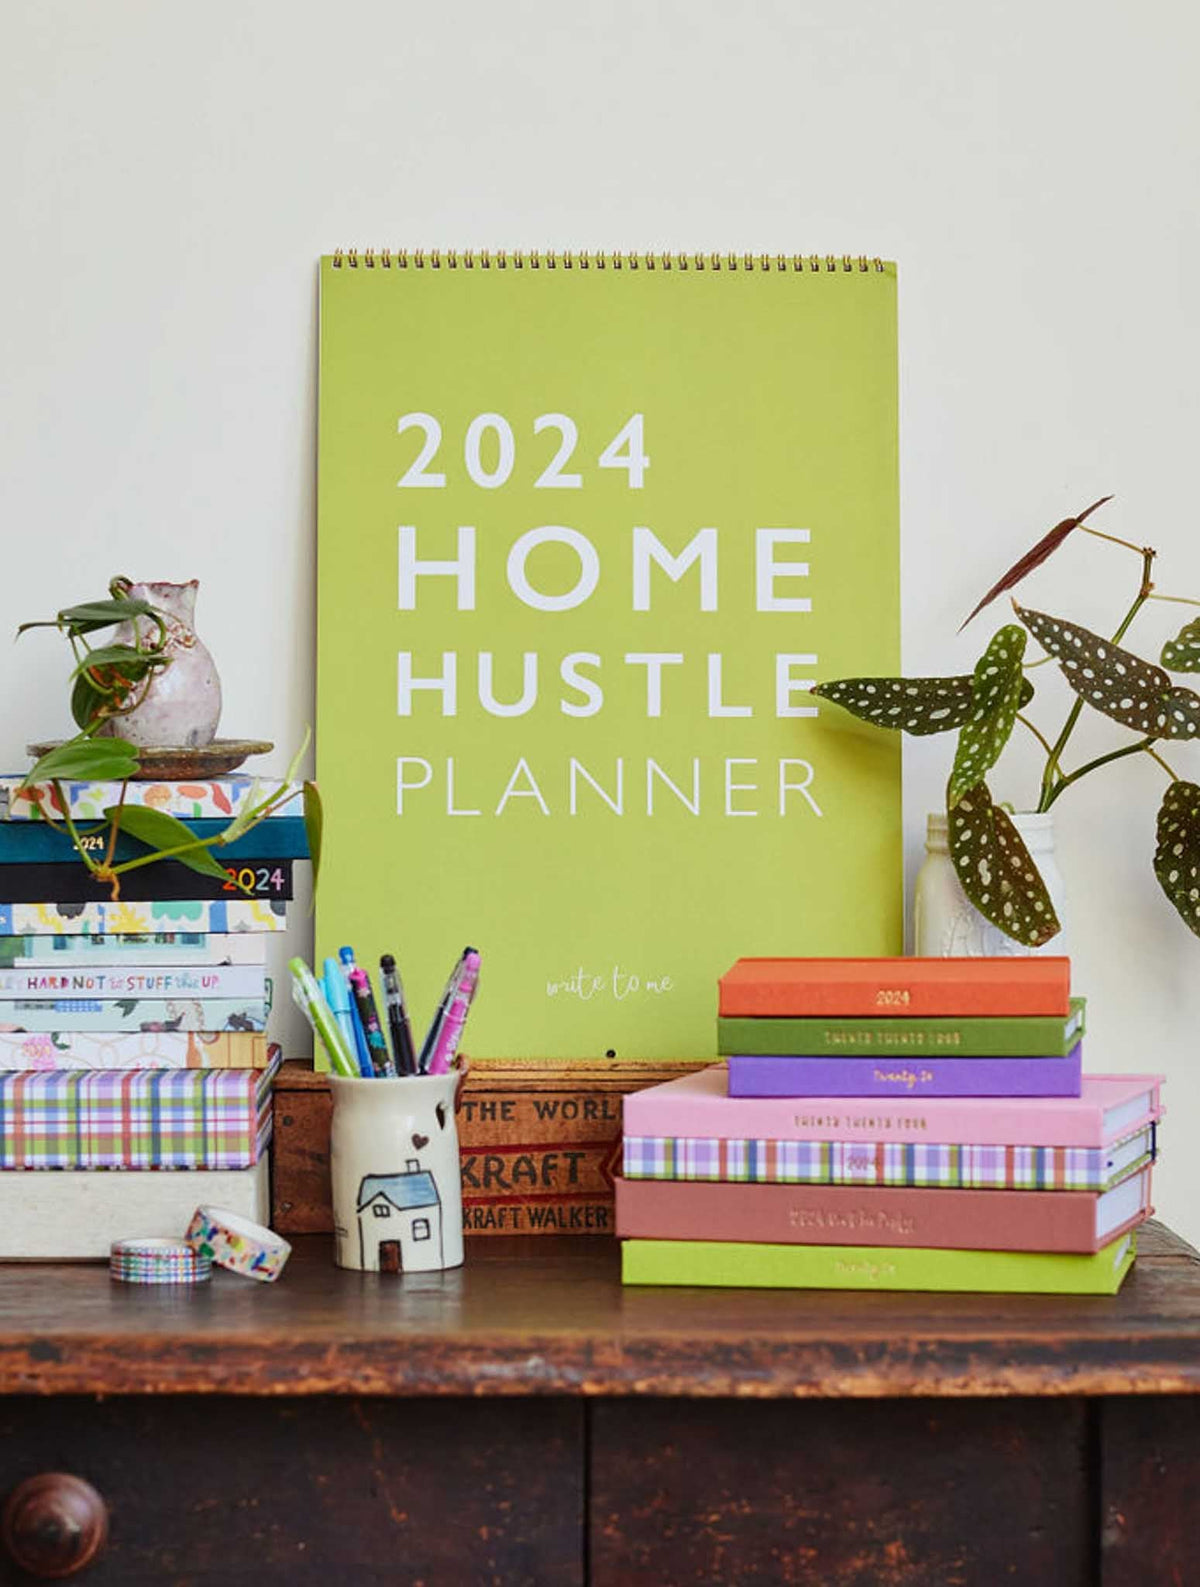 2024 Home Hustle Planner